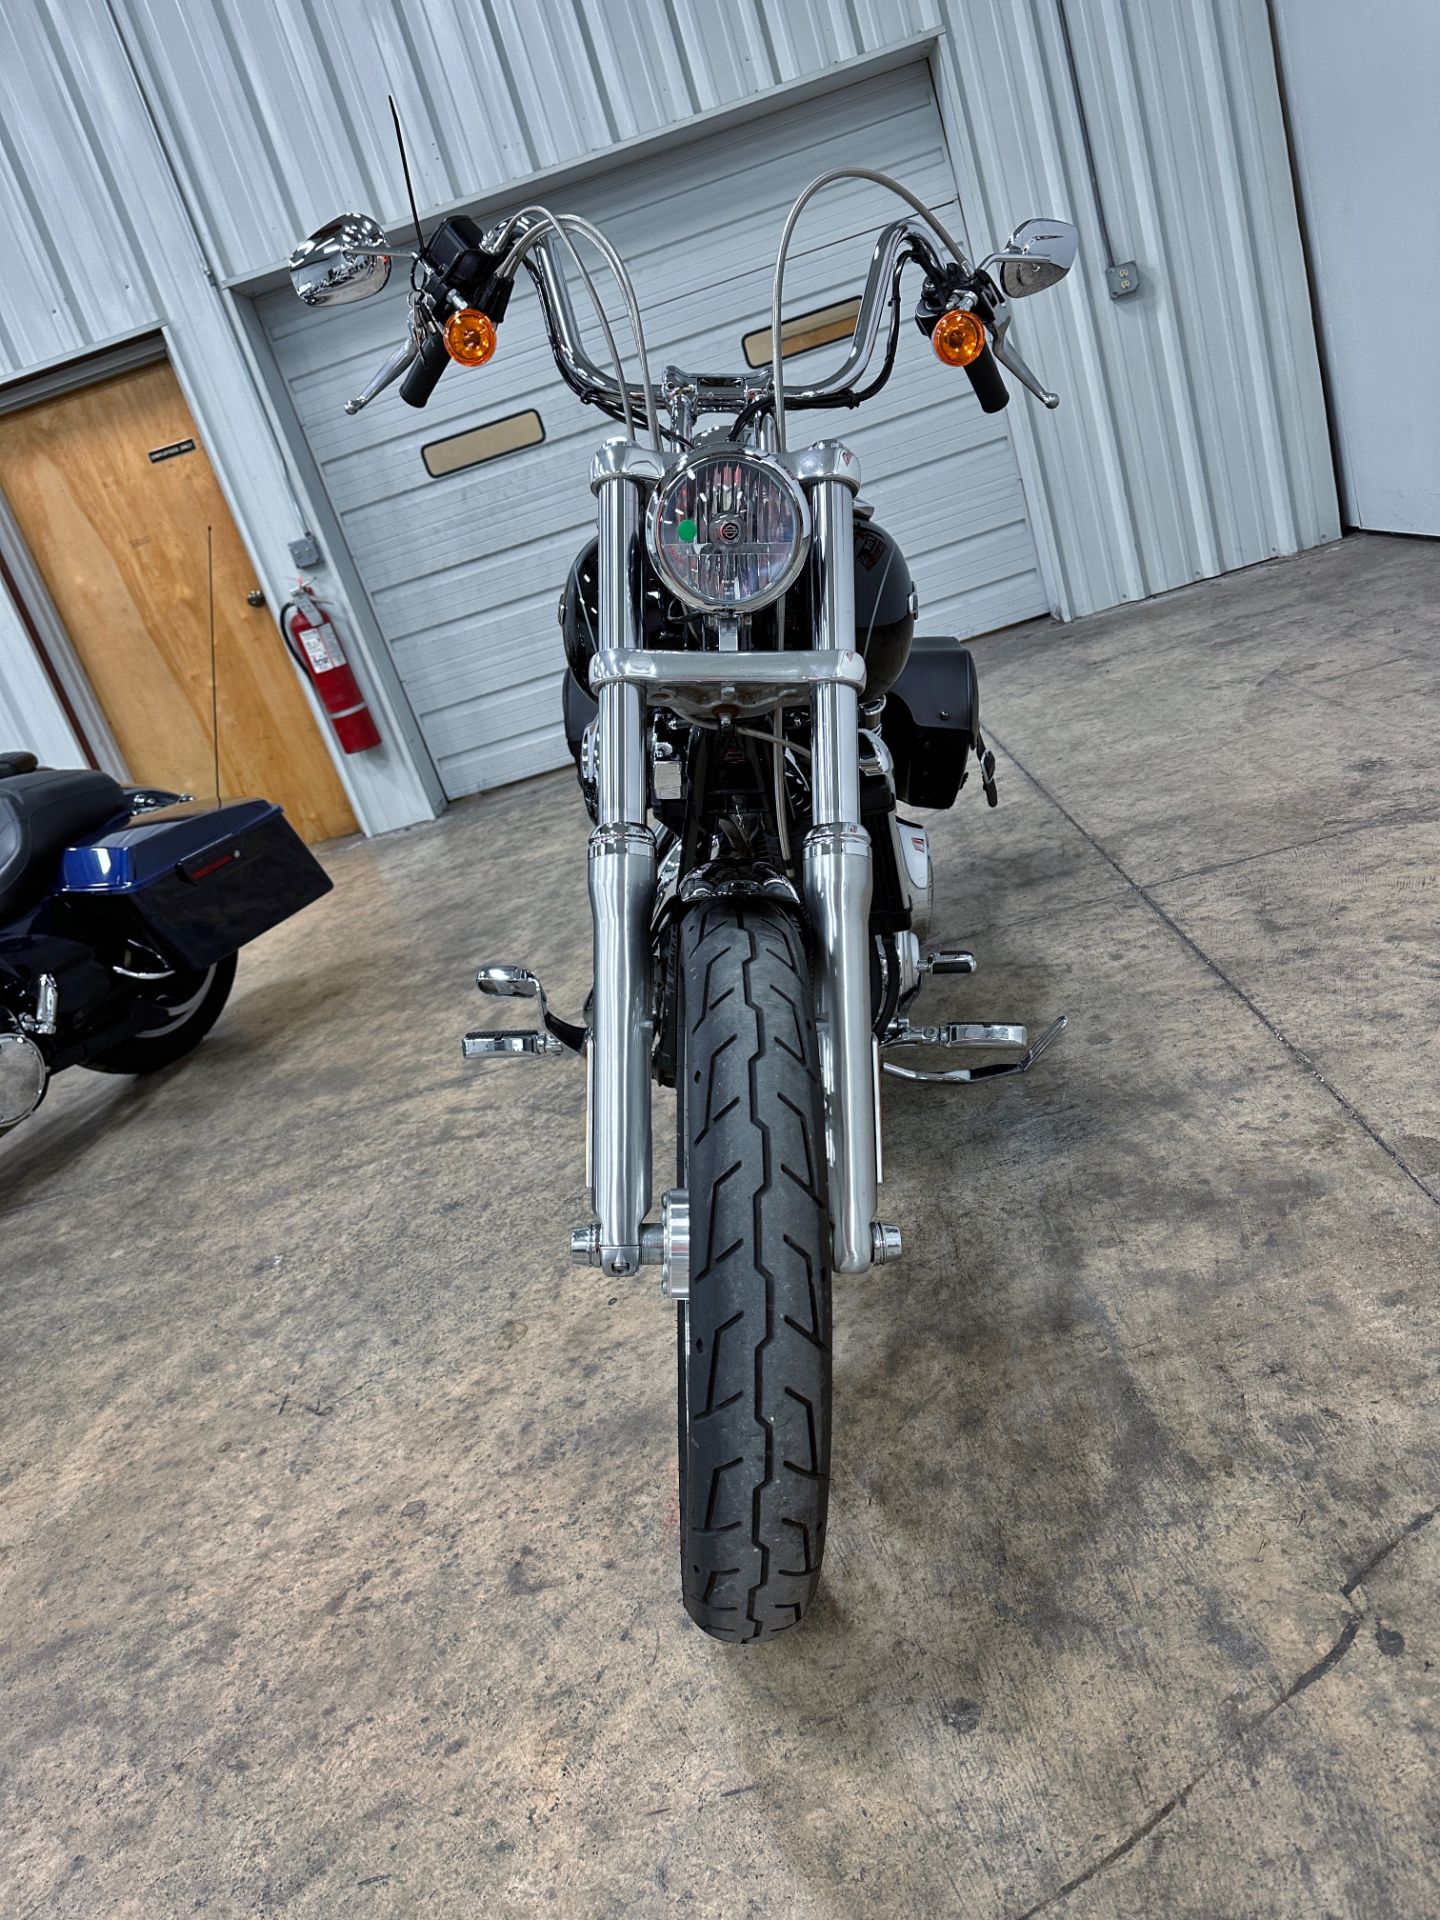 2013 Harley-Davidson Dyna® Super Glide® Custom in Sandusky, Ohio - Photo 3